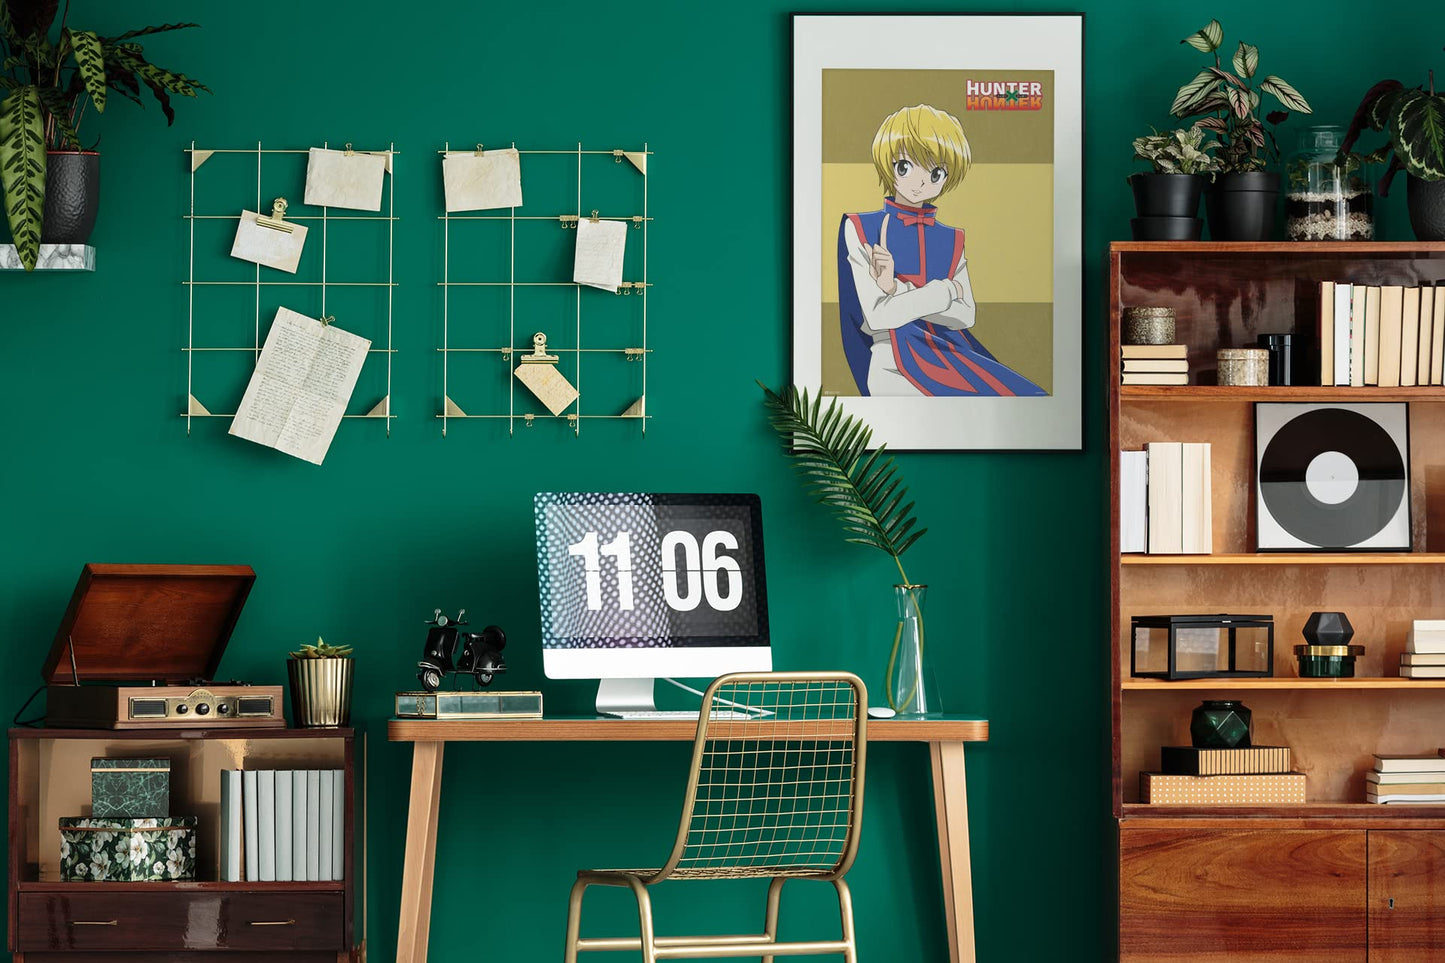 Hunter X Hunter Anime Posters Modern Anime Merch Wall Decor Kurapika Manga Series Cool Home Living Room Bedroom Wall Art Decorations Japanese Manga Fans Gift Cool Wall Decor Art Print Poster 12x18